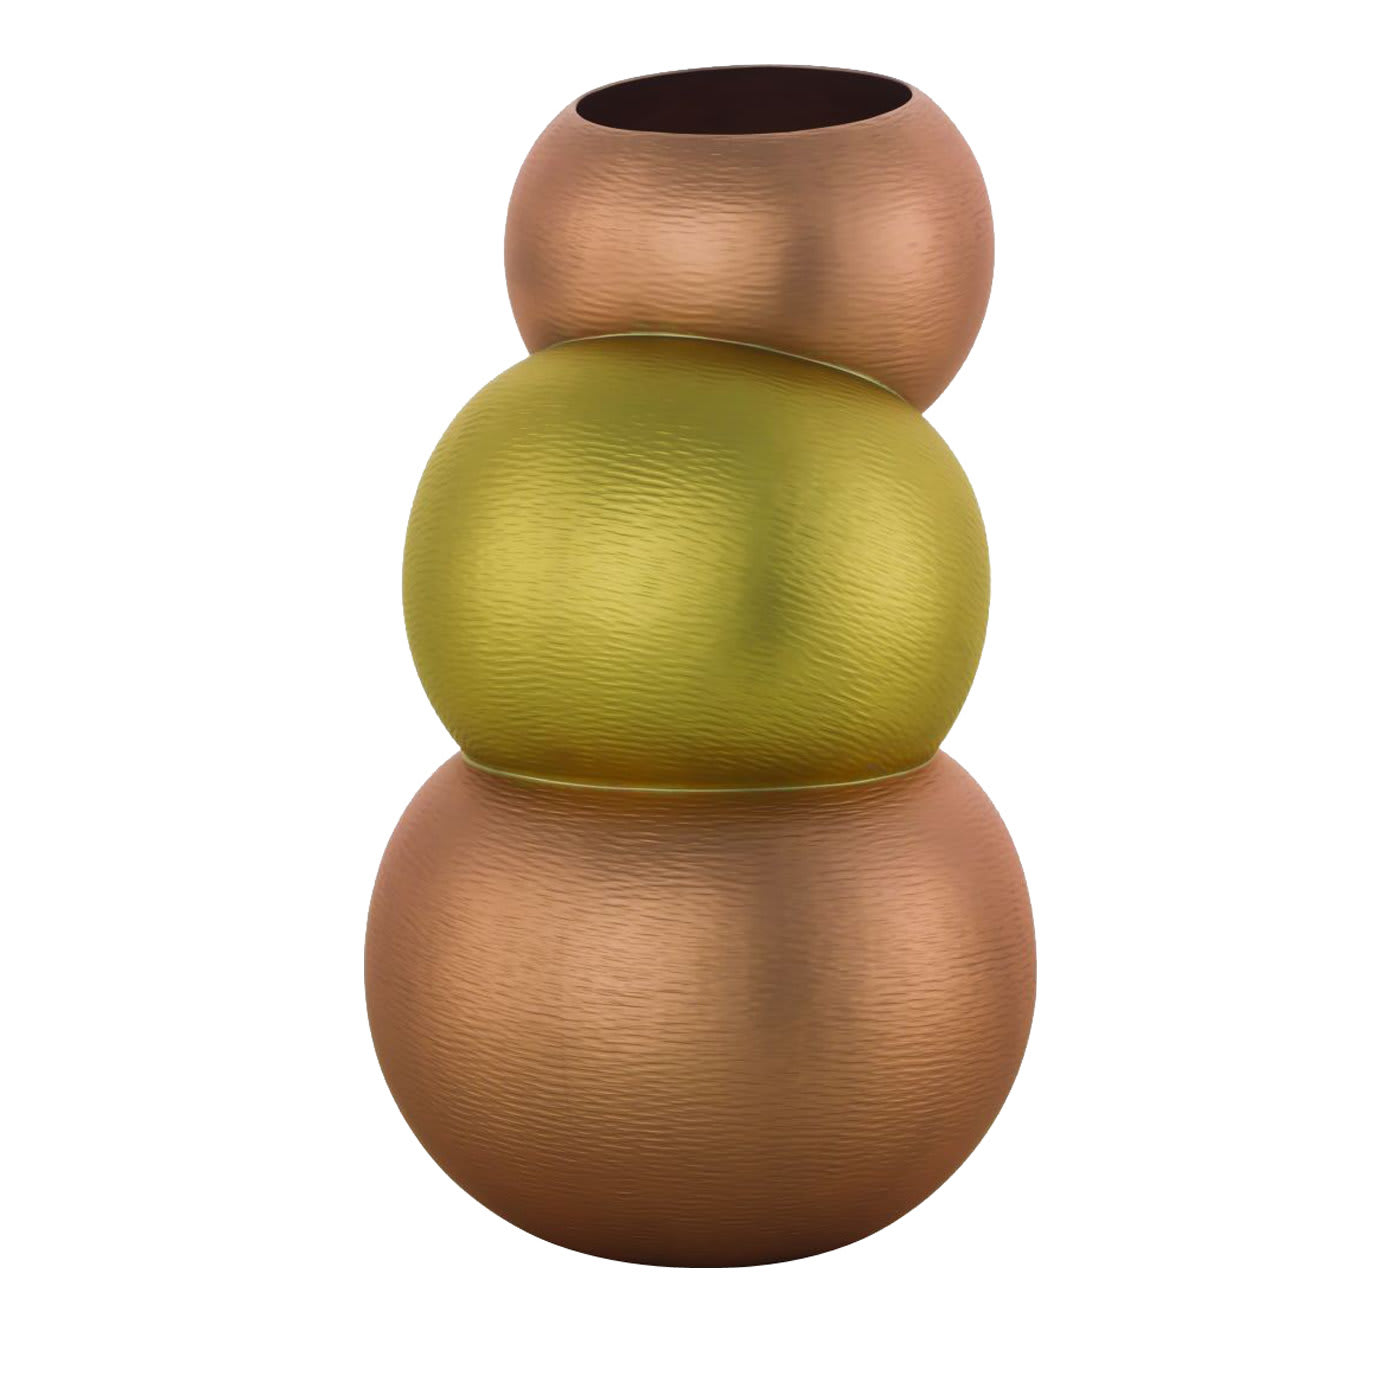 Equilibri Vase - Zanetto